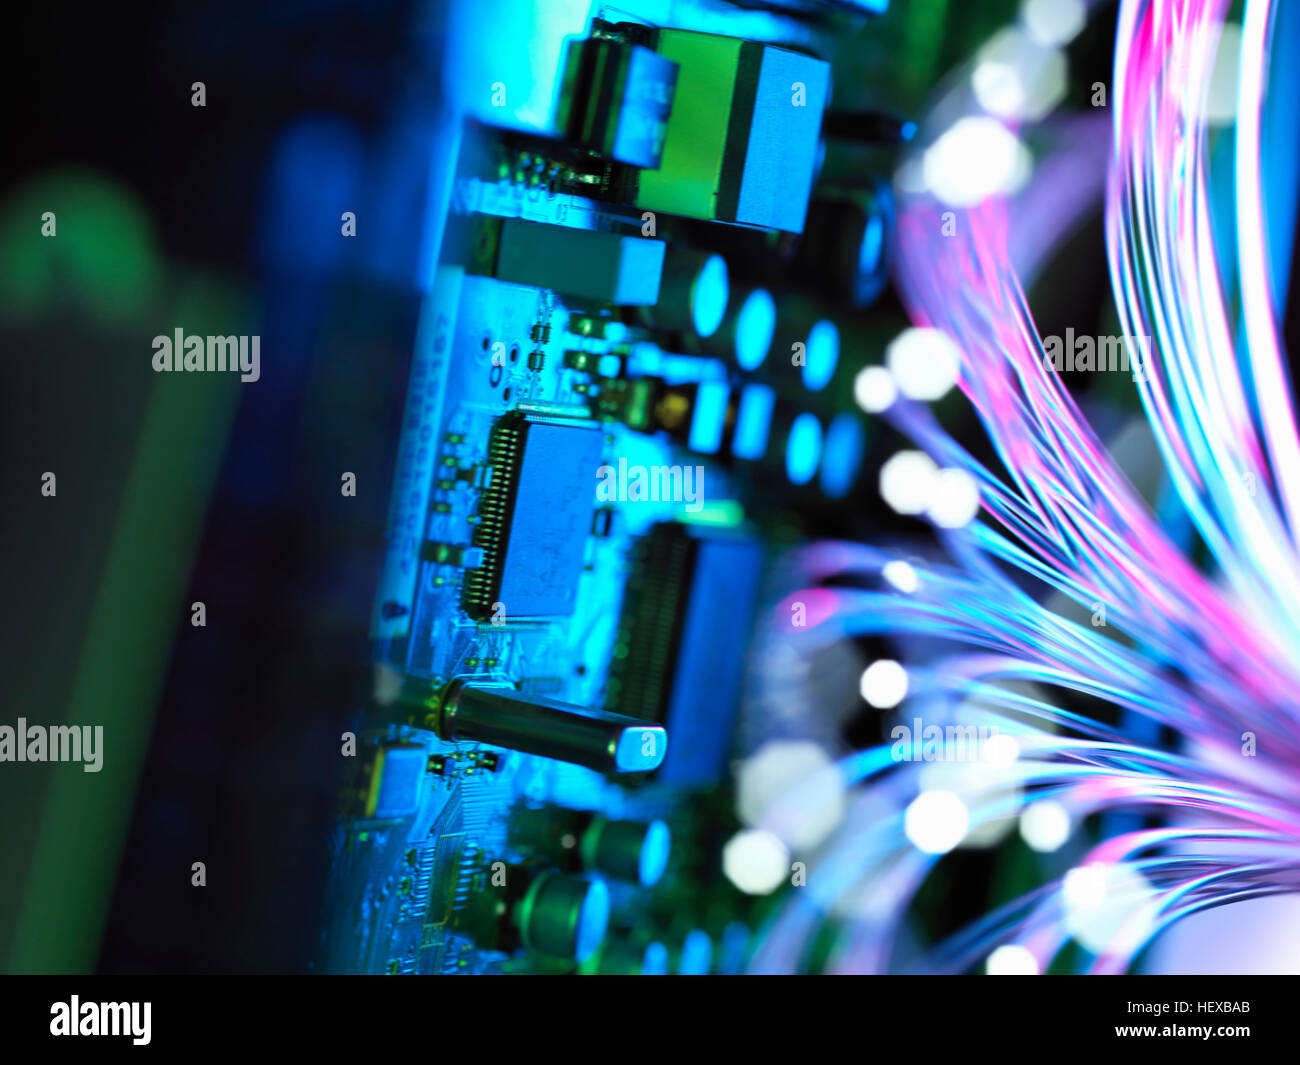 Cyber attack with fibre optics shooting past electronics of broadband hub Stock Photo